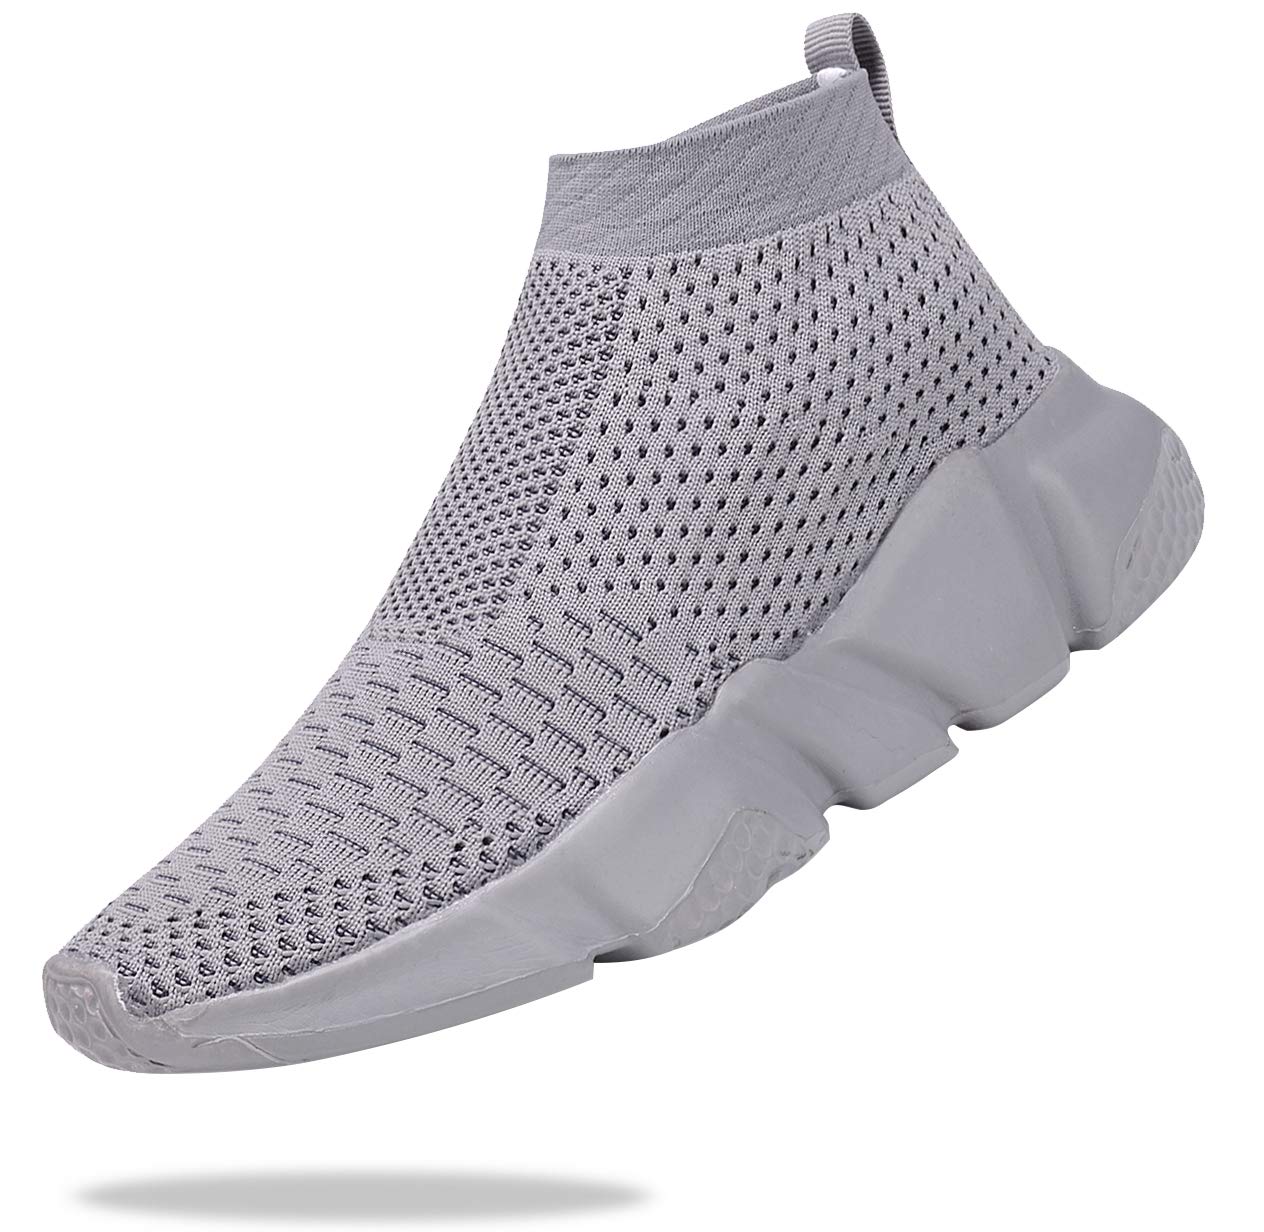 Santiro Kids Walking Shoes Boys Lightweight Breathable Slip On Knit Sock Sneakers Full grey 2 M US